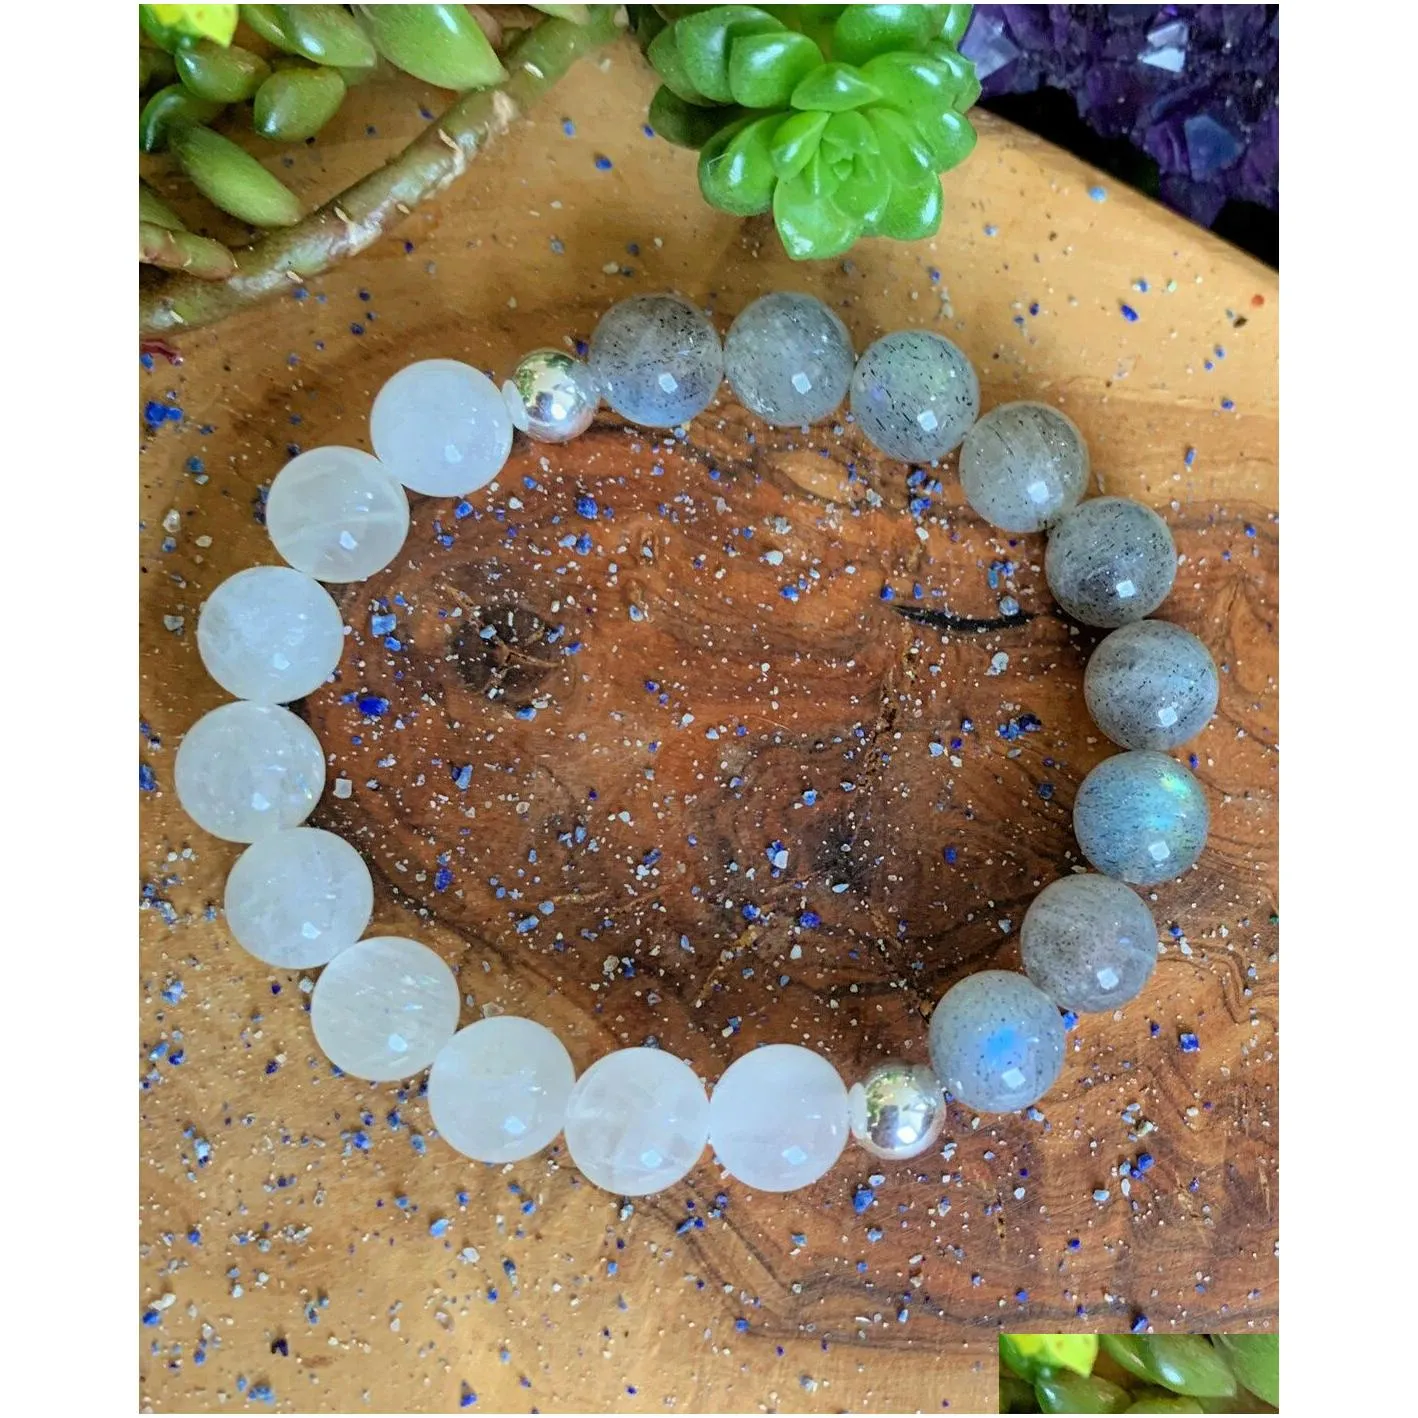 MG1280 10 mm Magical Moon Wrist Mala Bracelet Rainbow Moonstone Labradorite Bracelet Women`s Meditative Spiritual Jewelry